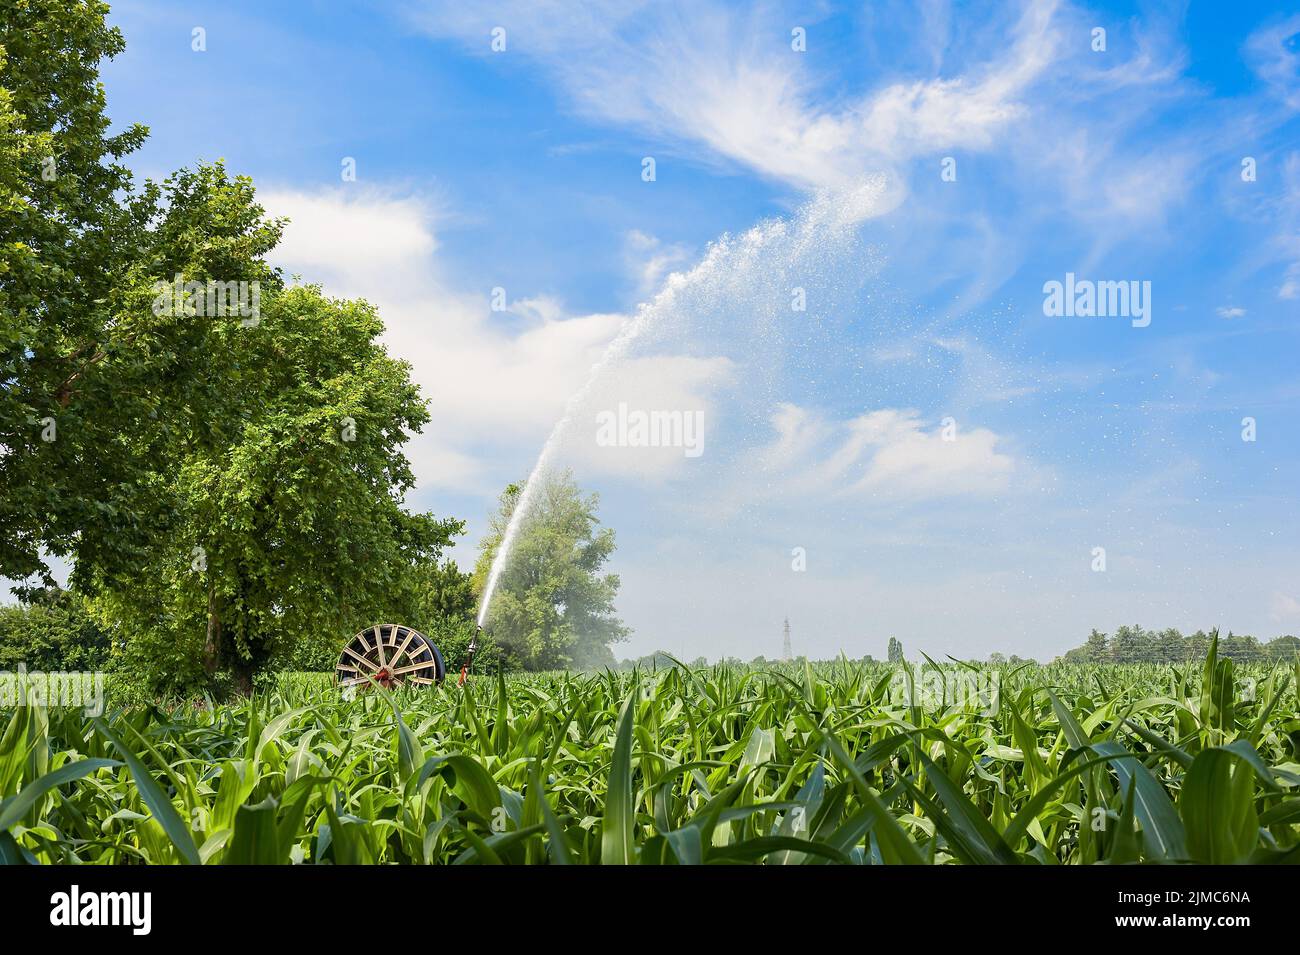 Water sprinkler installation in a field of corn. Stock Photo